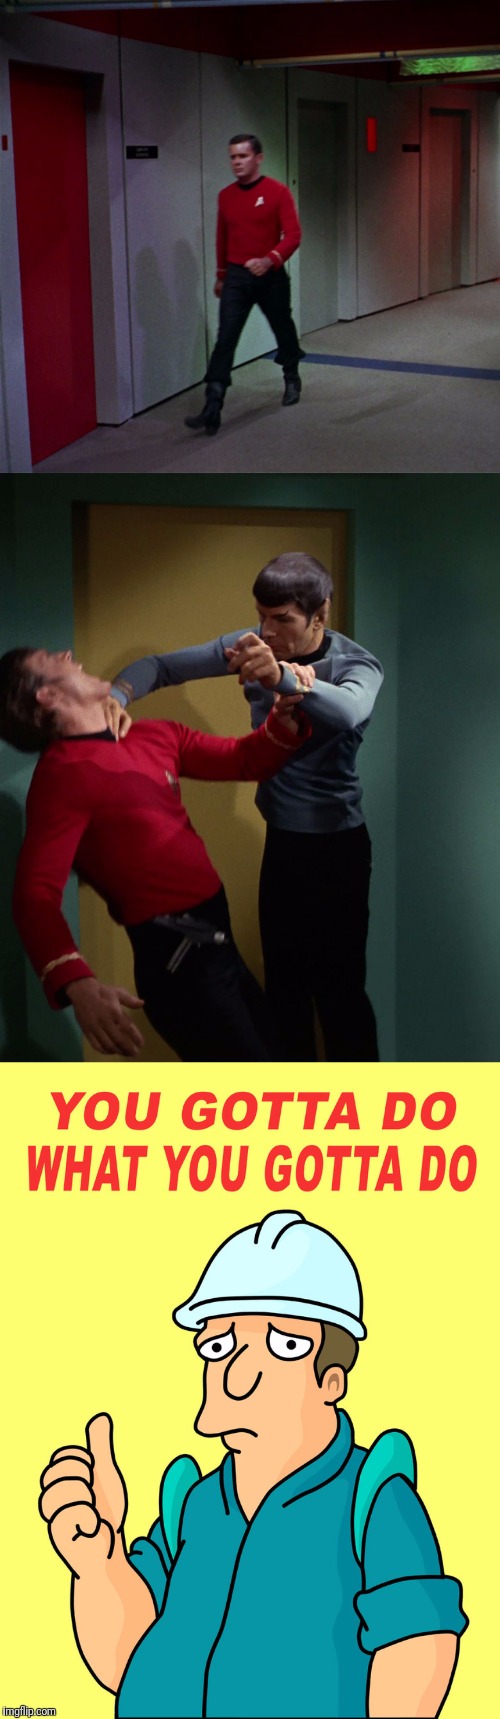 Redshirt Quota To Meet | image tagged in star trek,spock,redshirts | made w/ Imgflip meme maker